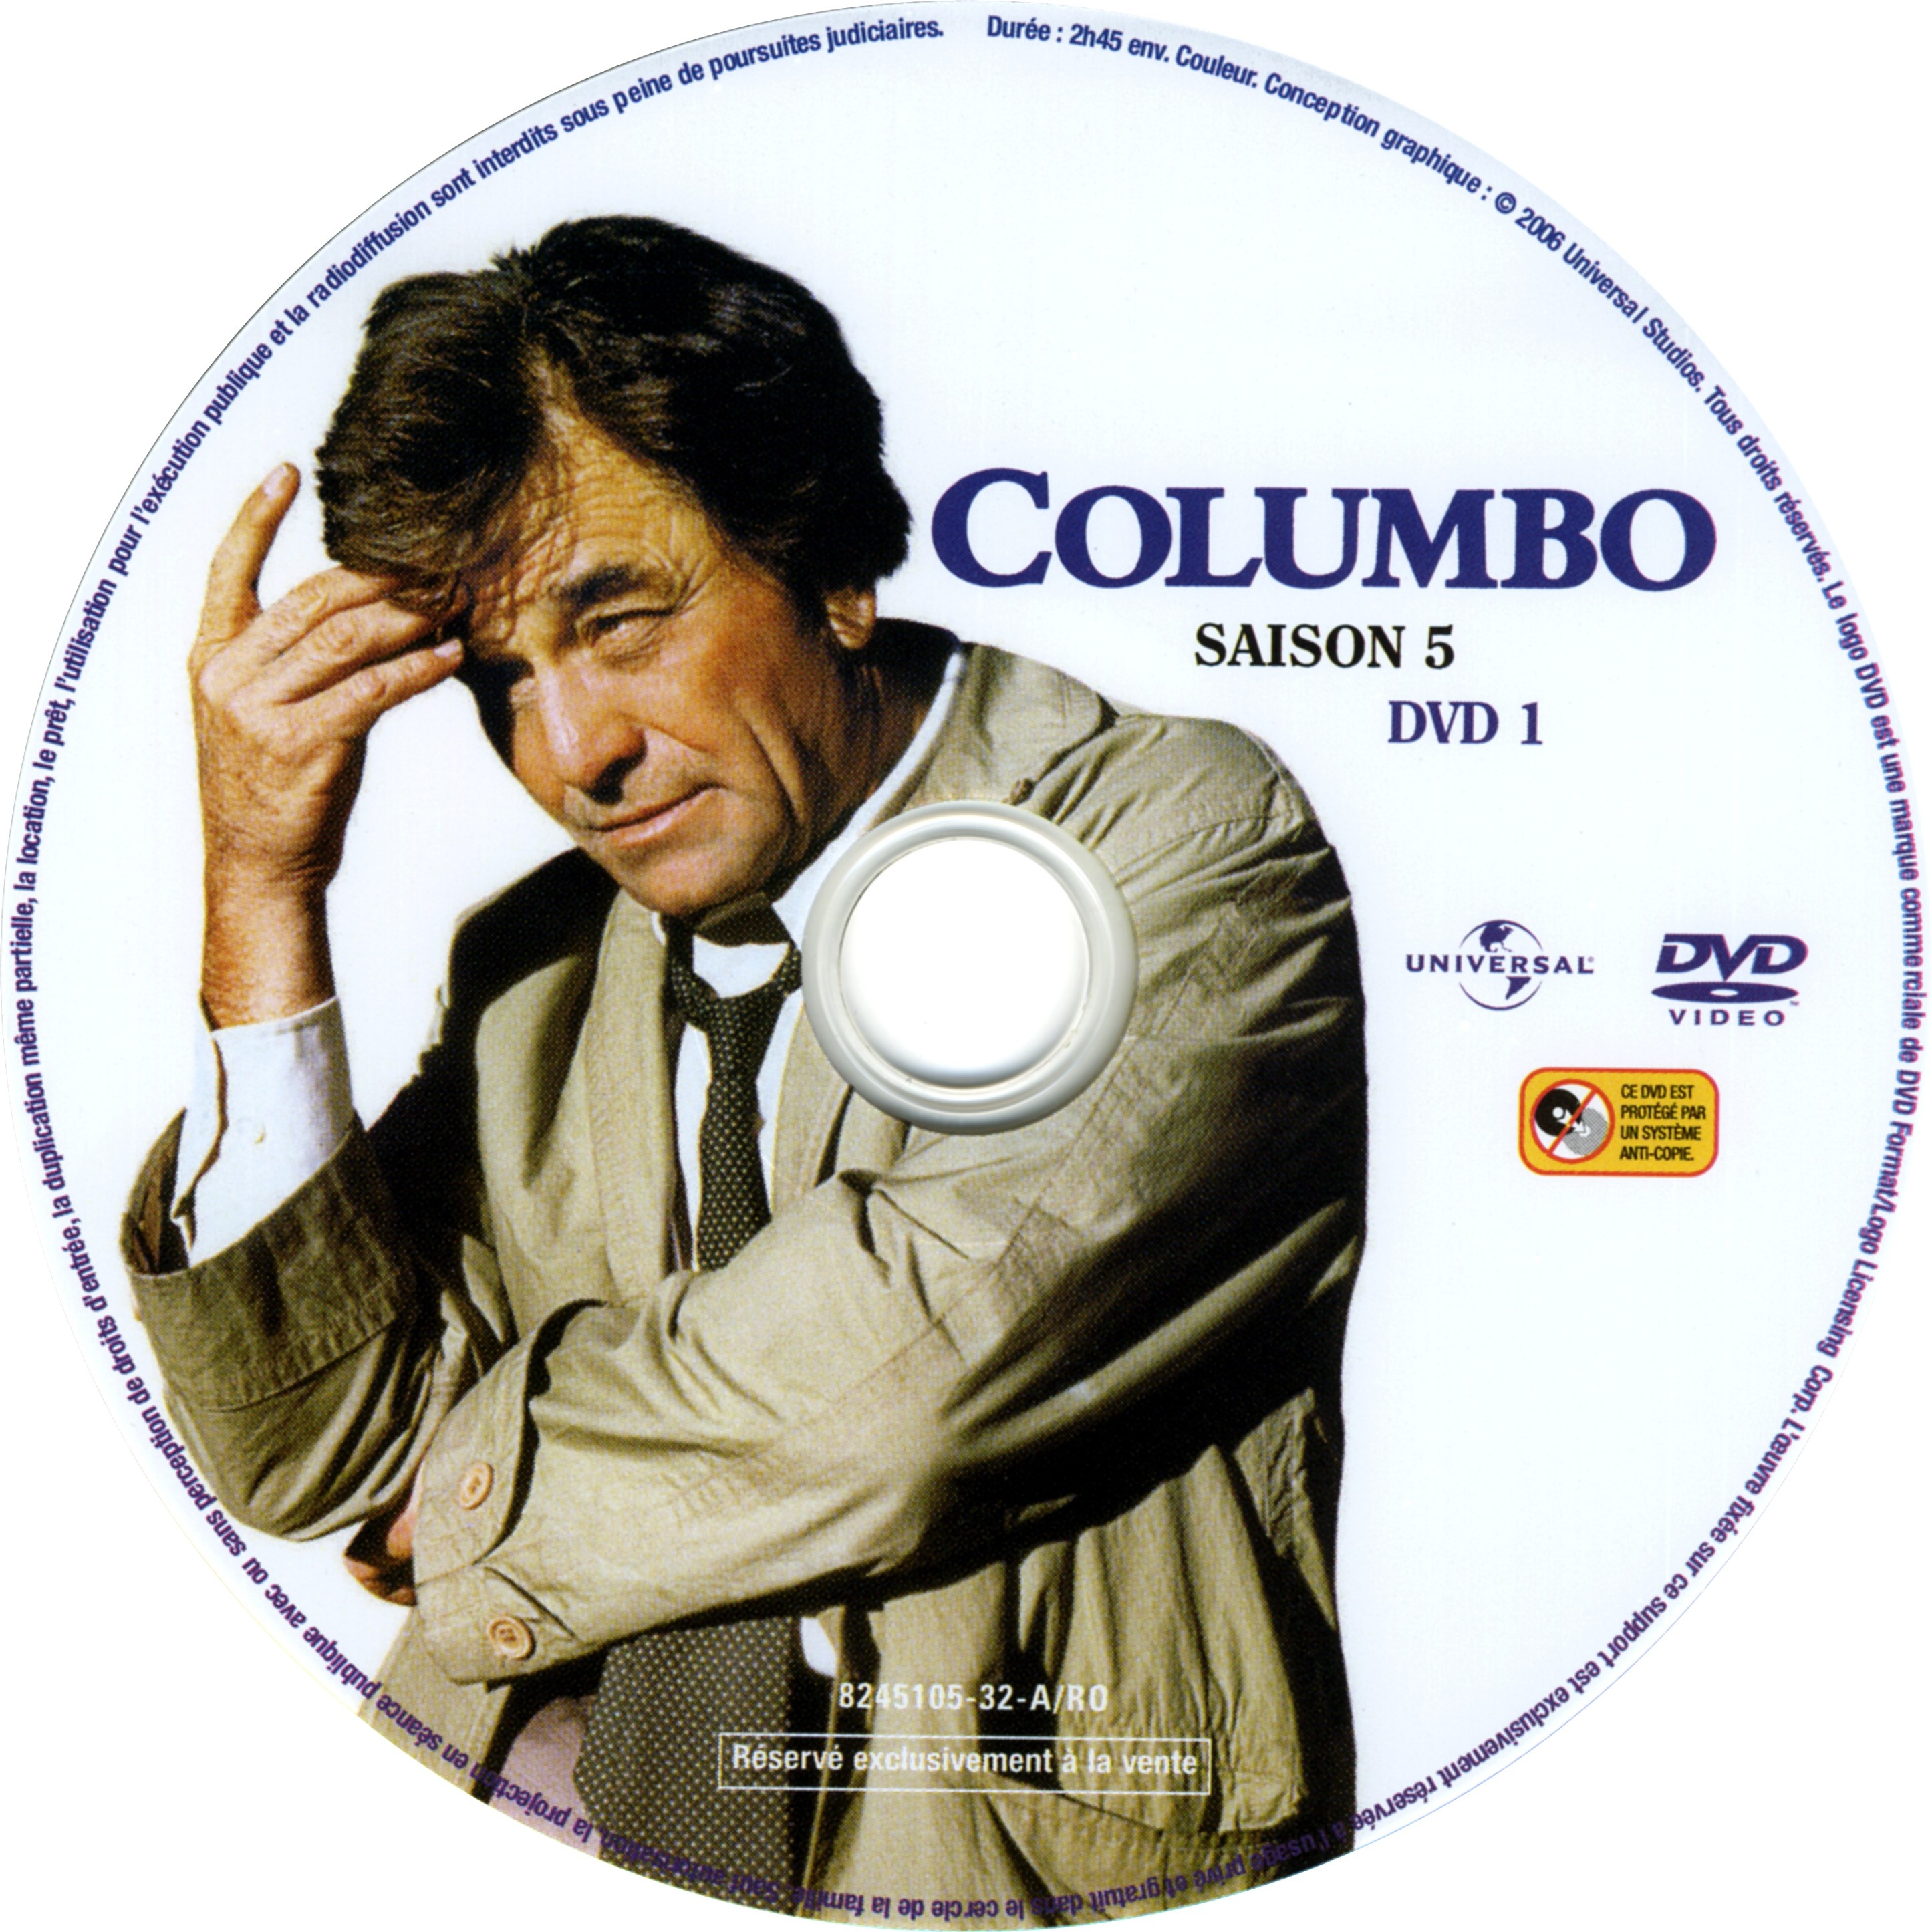 Columbo saison 5 DISC 1